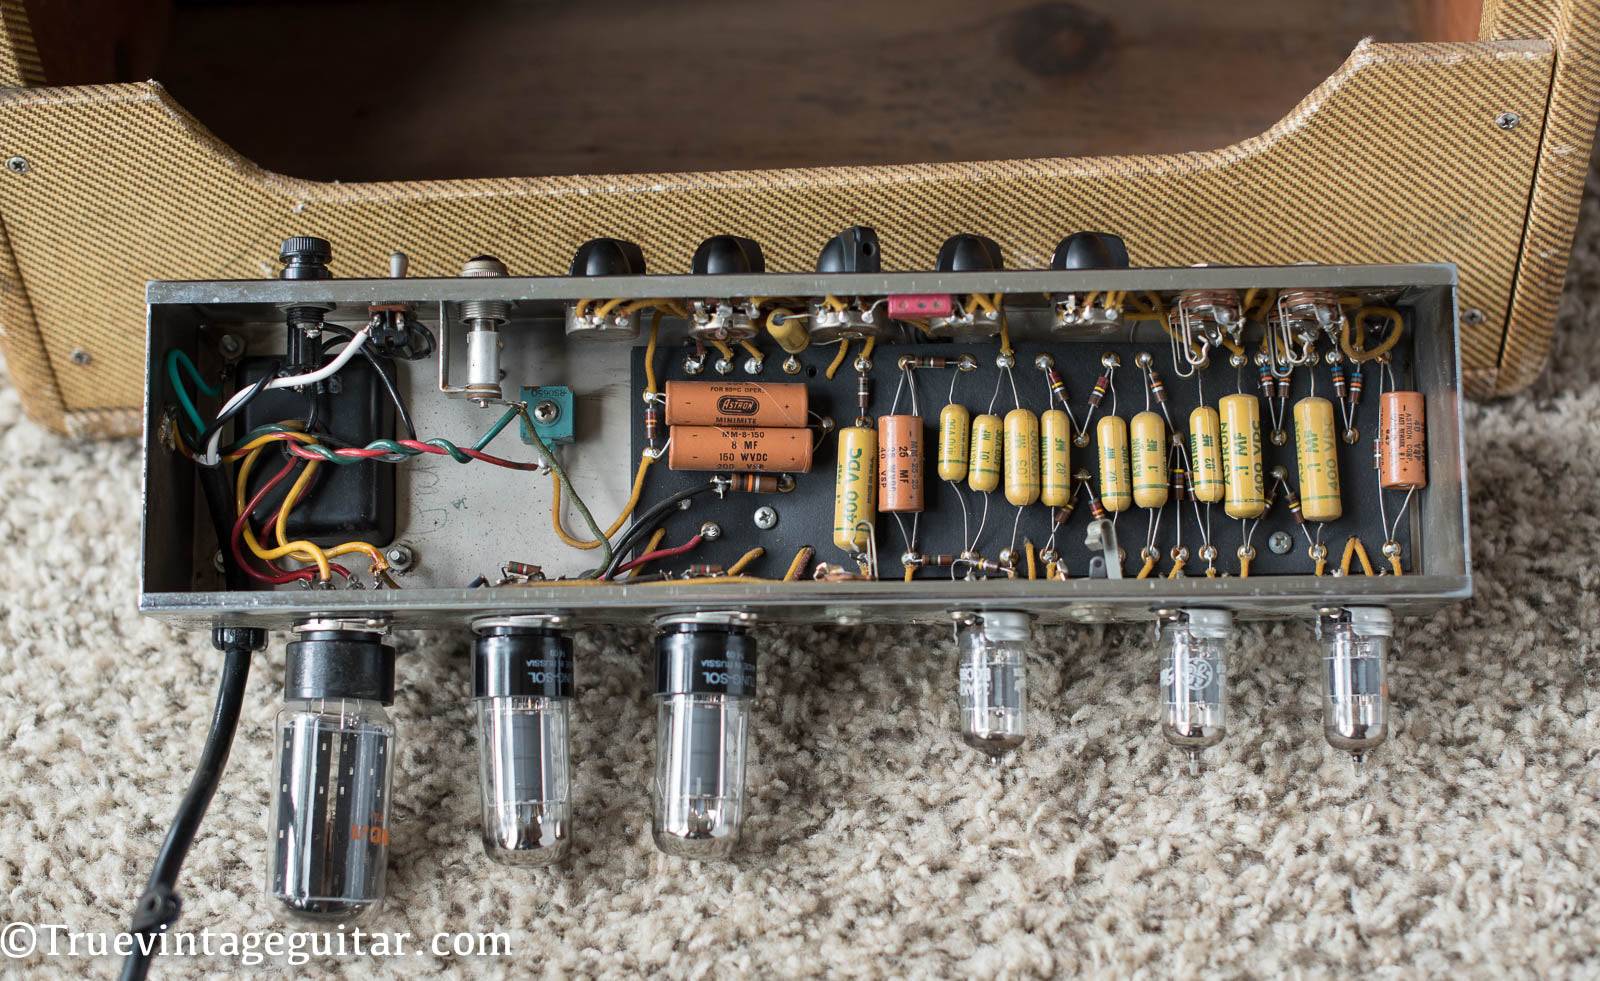 Chassis, original electronics, Vintage 1960 Fender Tremolux 5G9 Guitar Amplifier